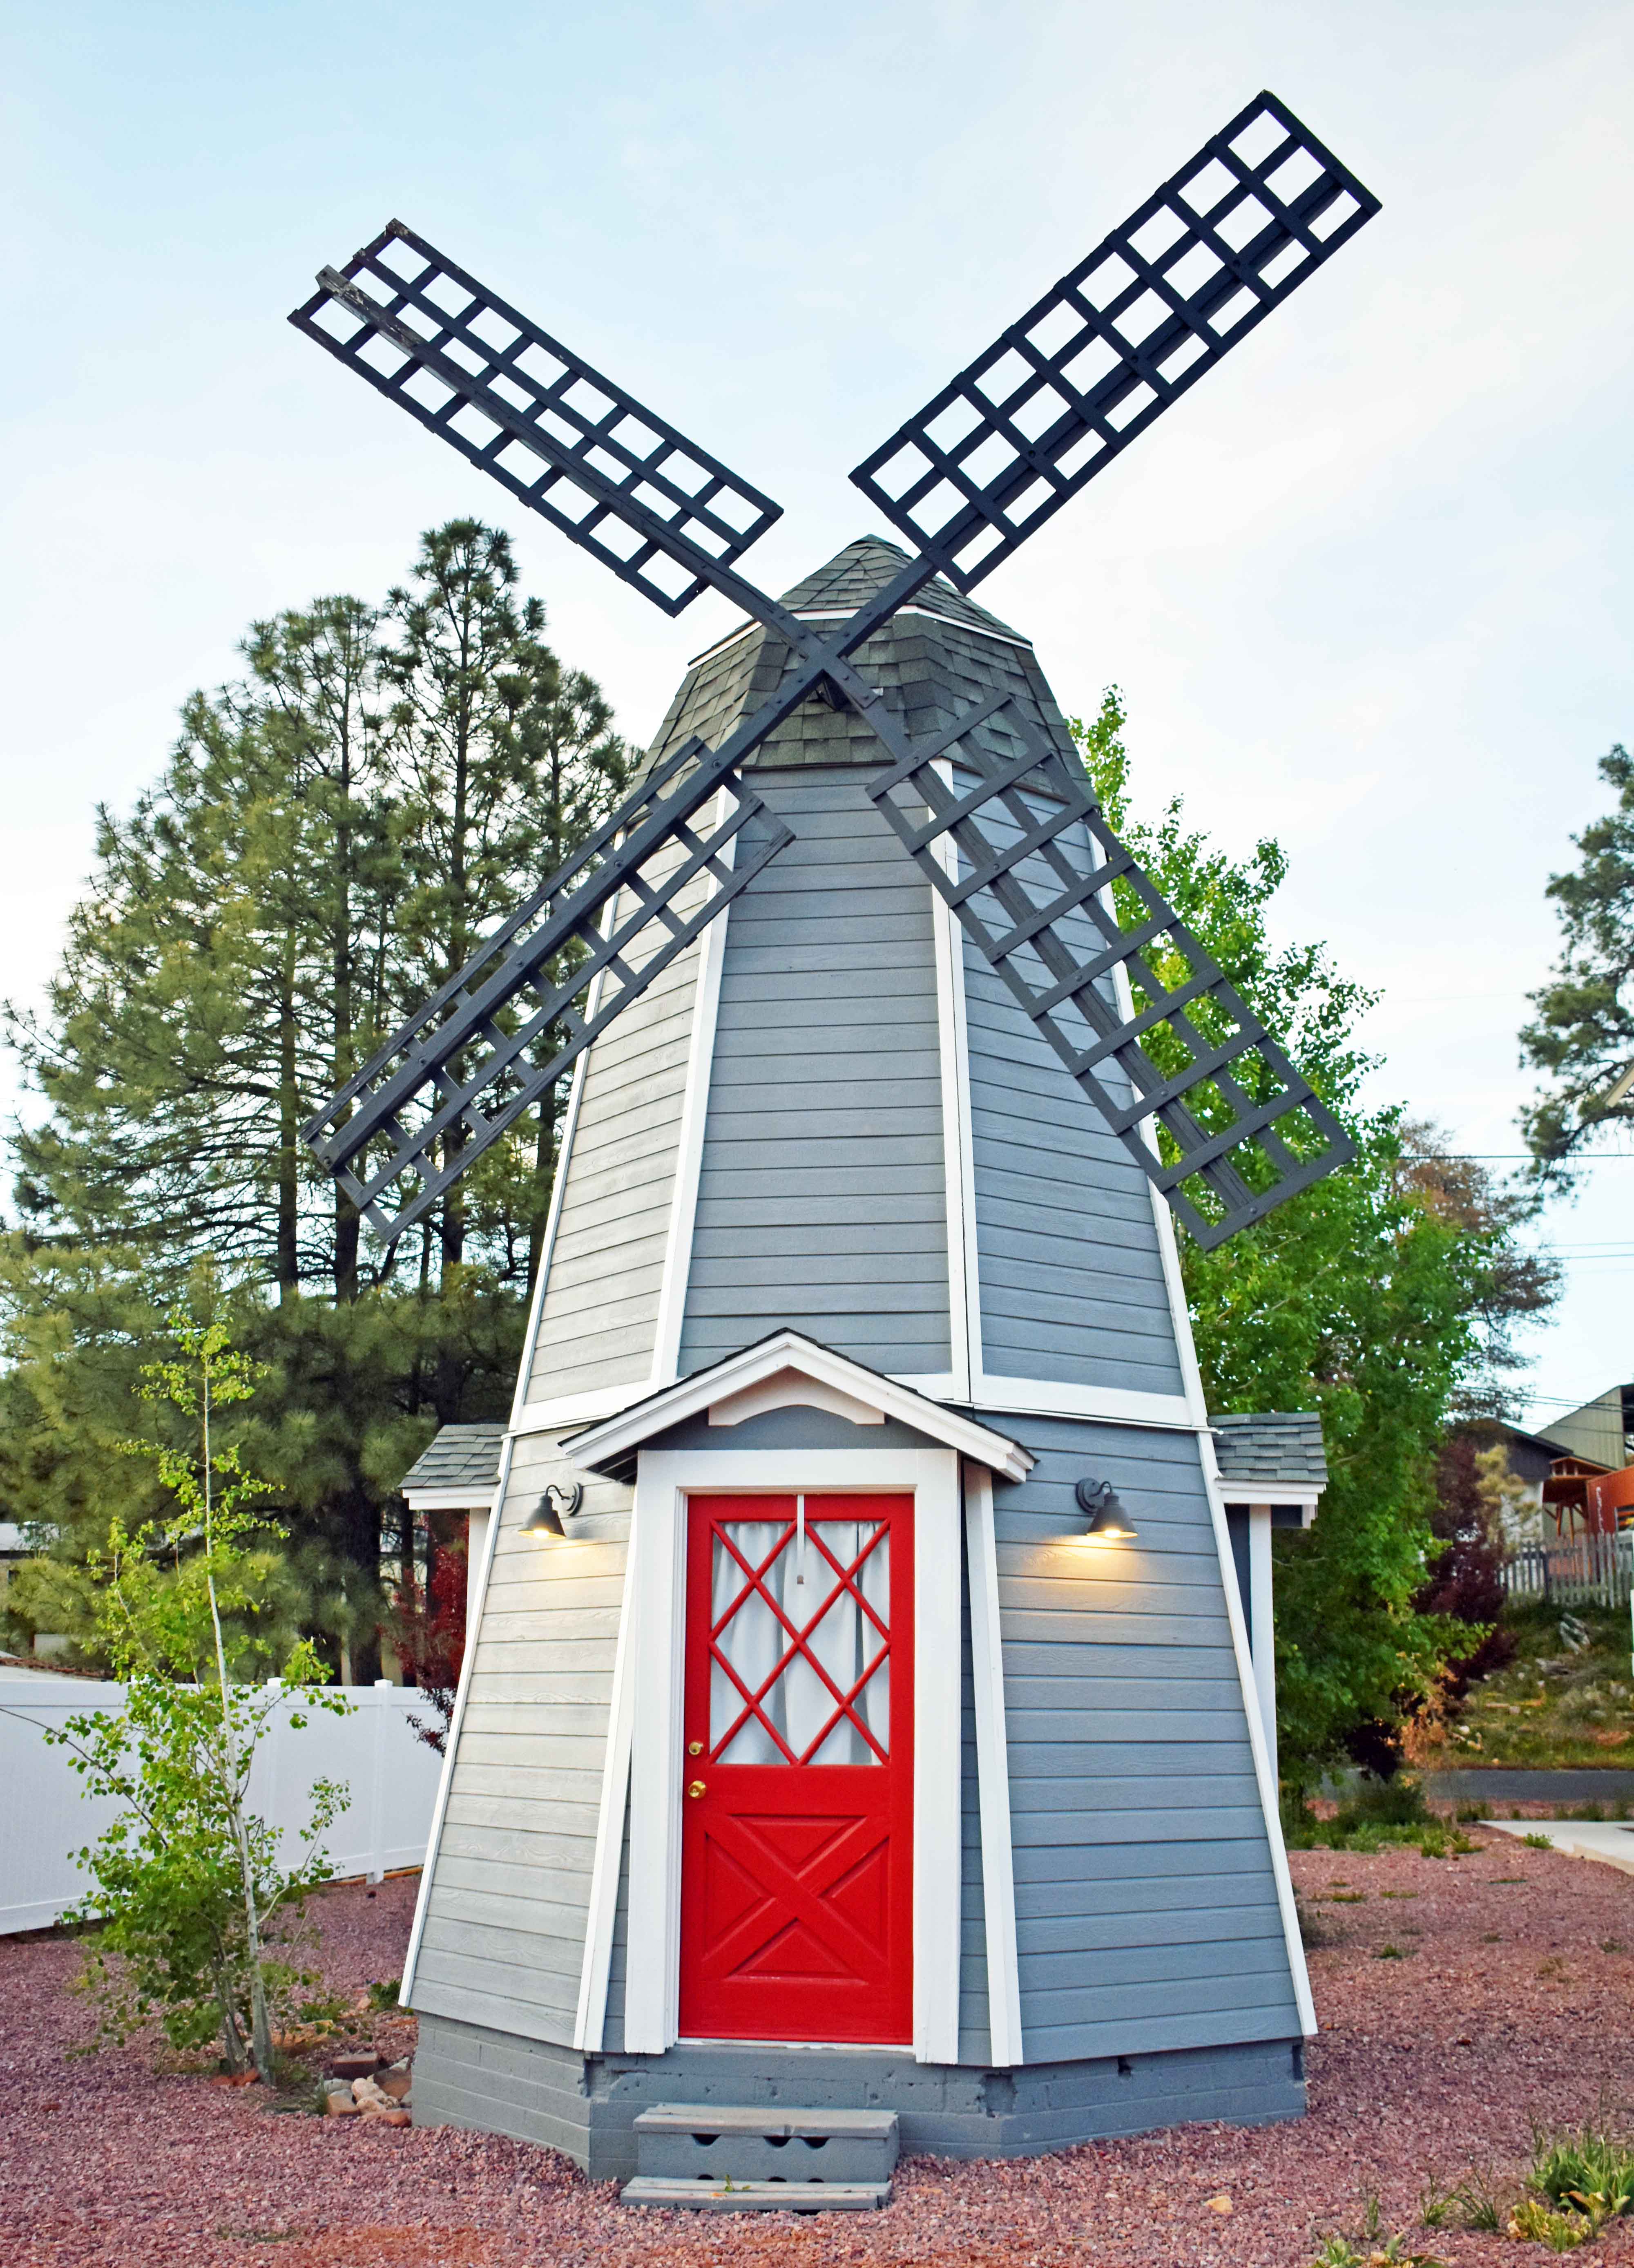 The Strawberry Inn Windmill 2